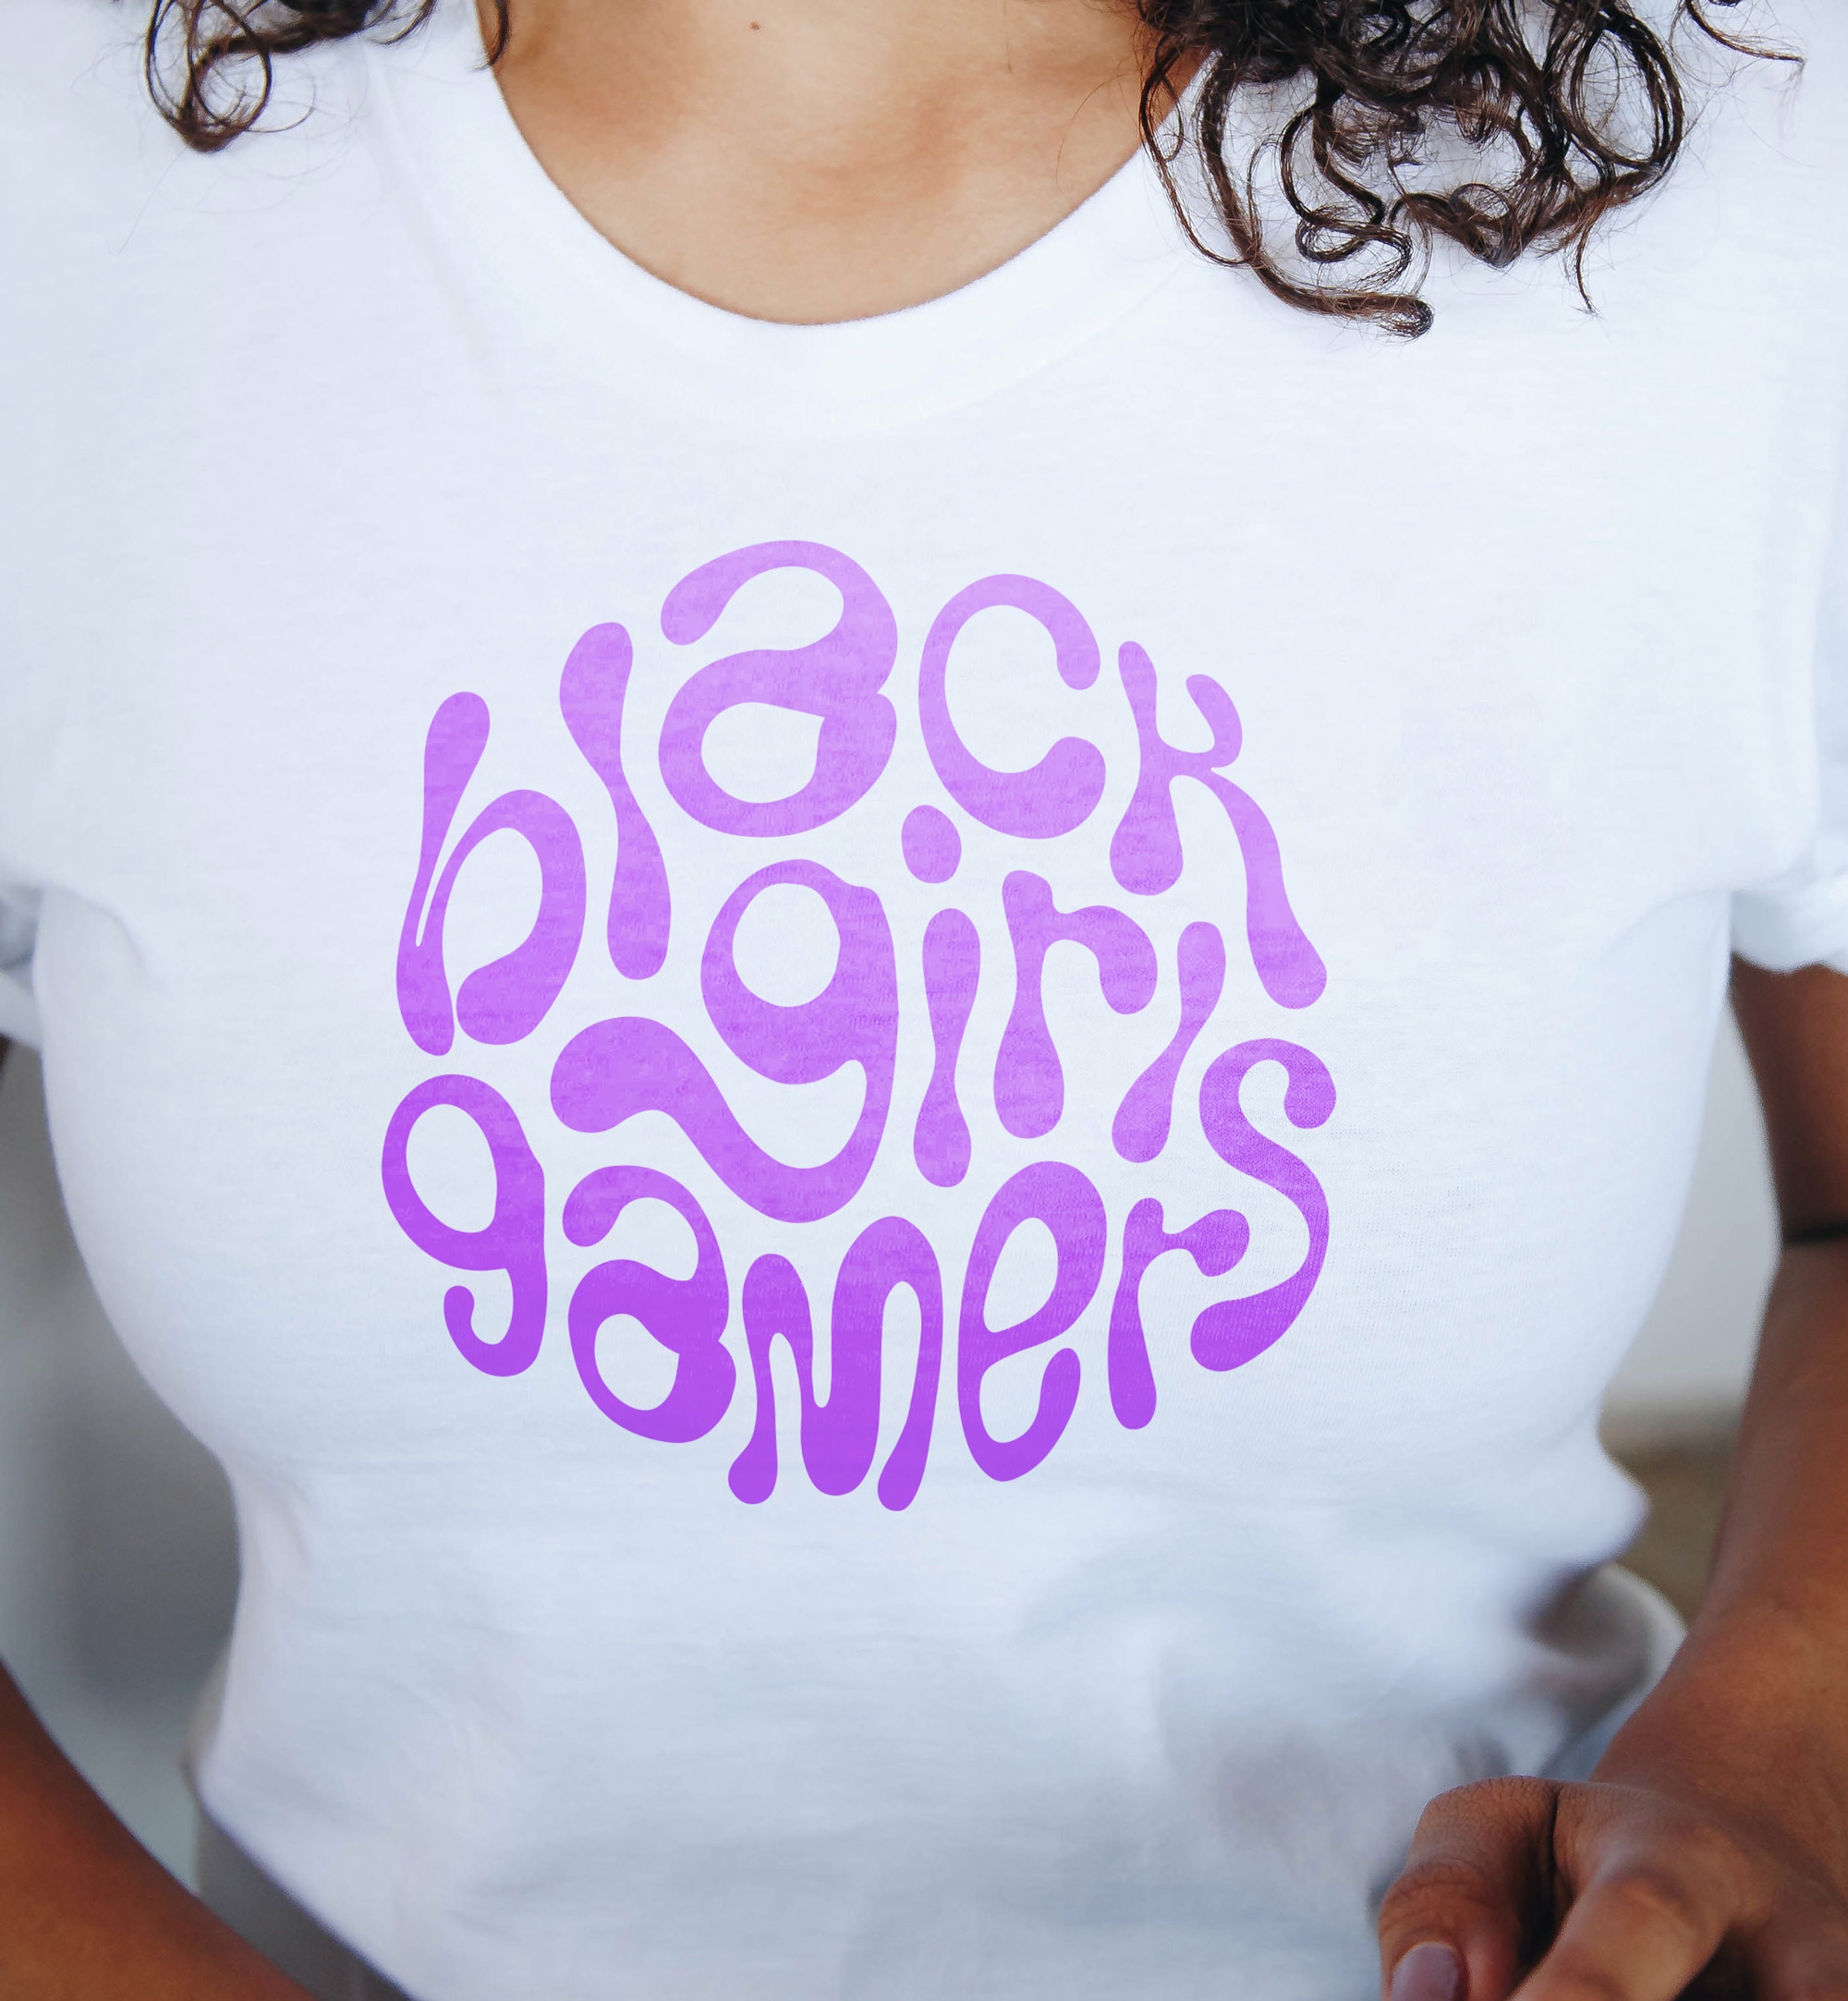 Black Girl Gamers logo shirt merchandise